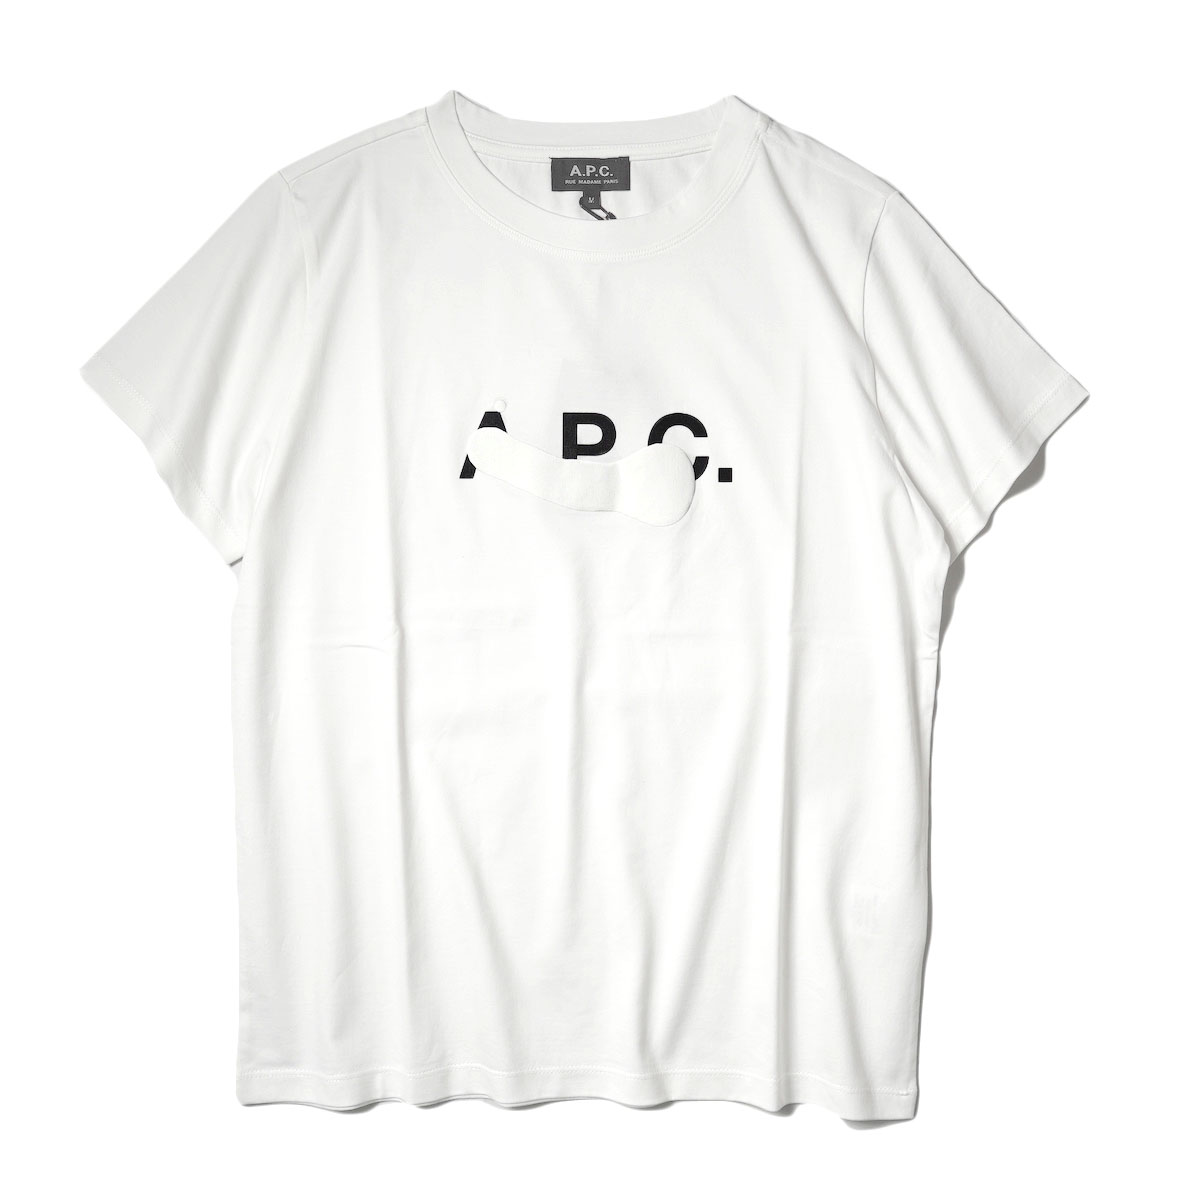 A.P.C. / Shibuya F Tシャツ (White)